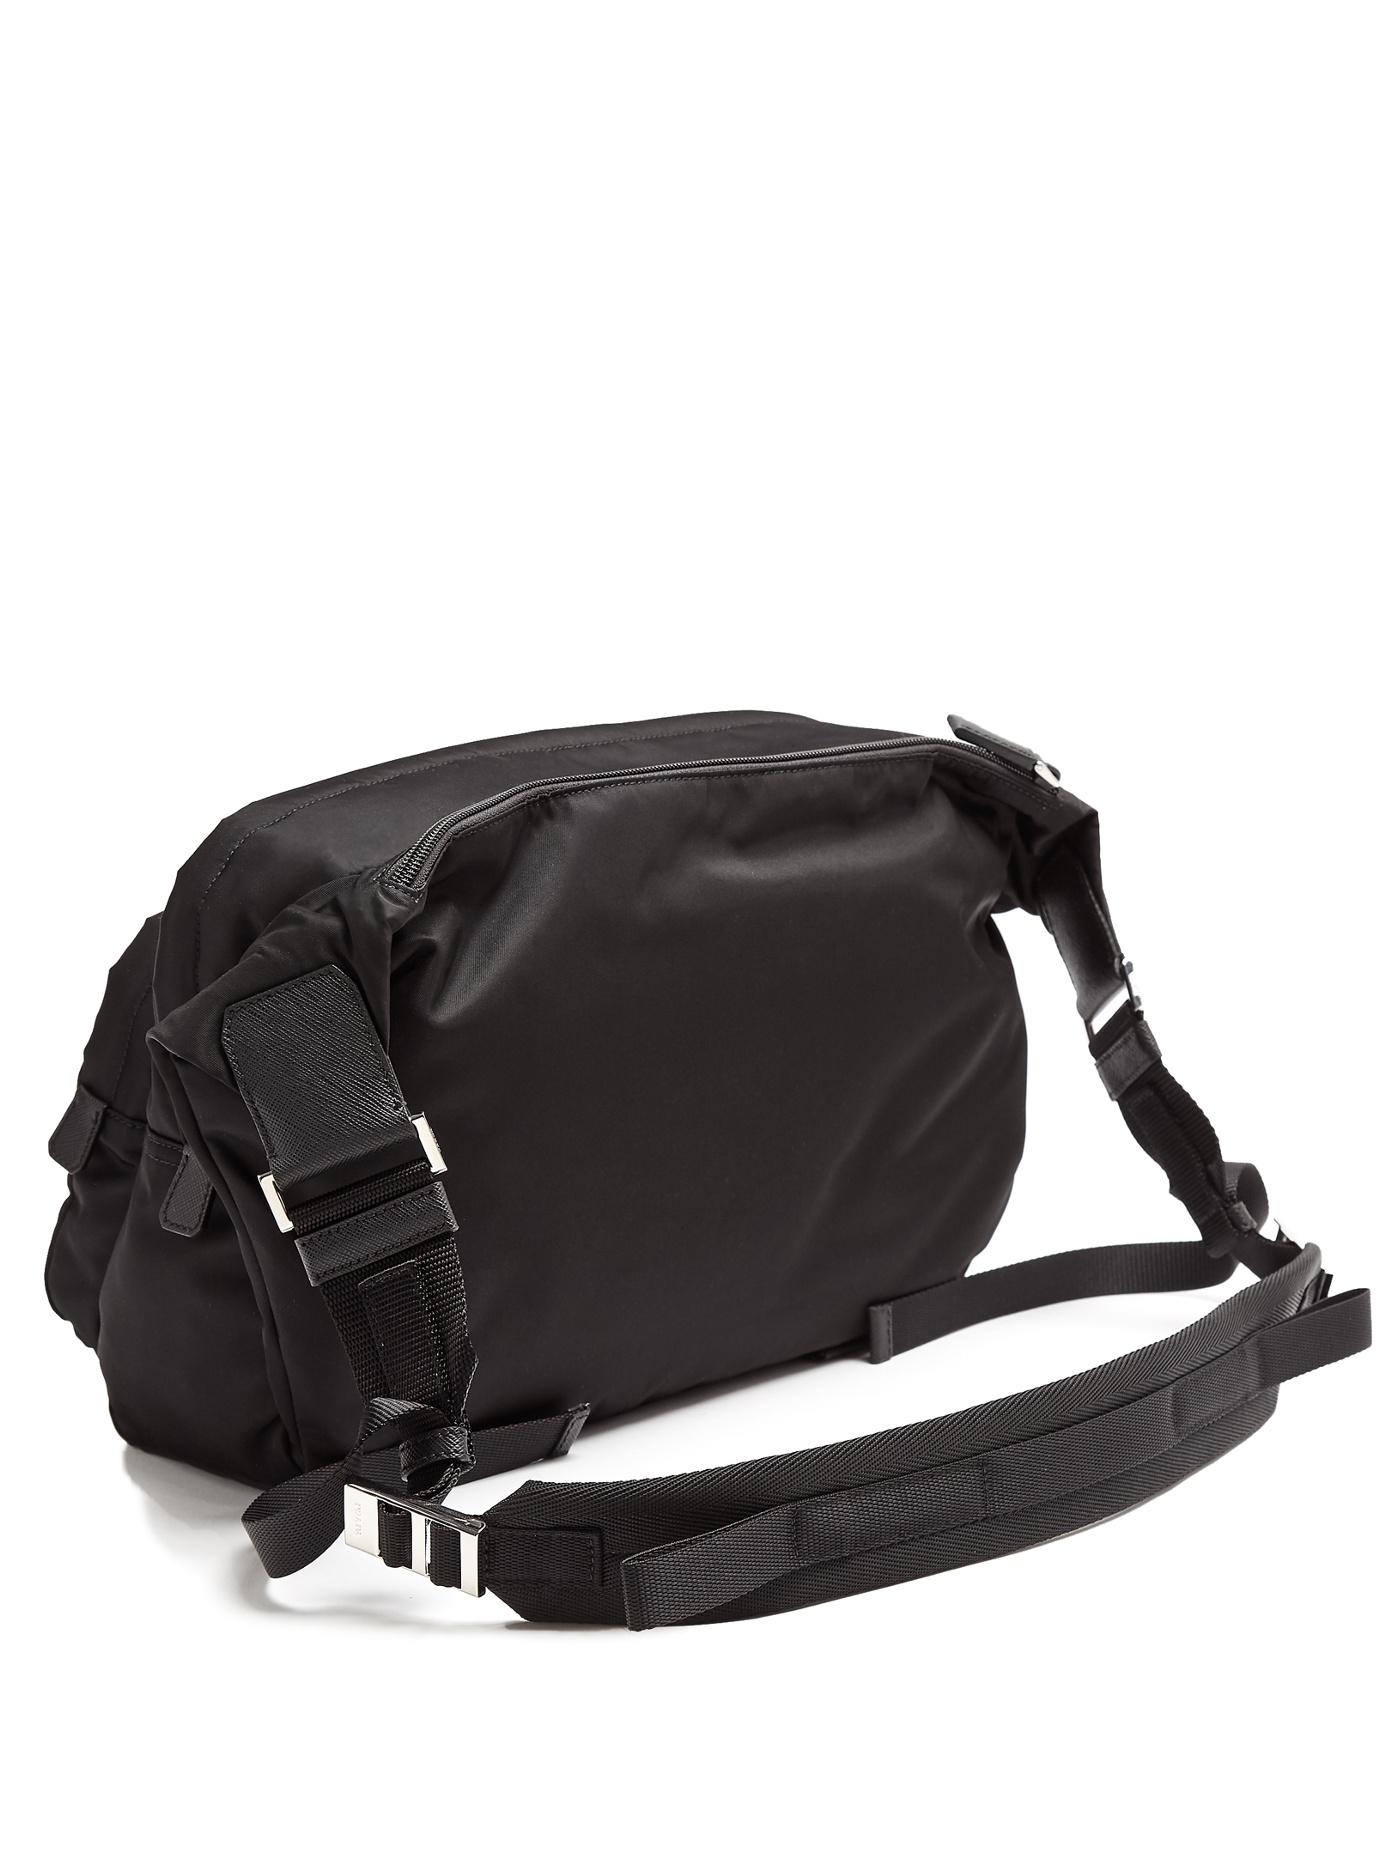 Prada Synthetic Nylon Cross-body Bag in Black for Men - Lyst